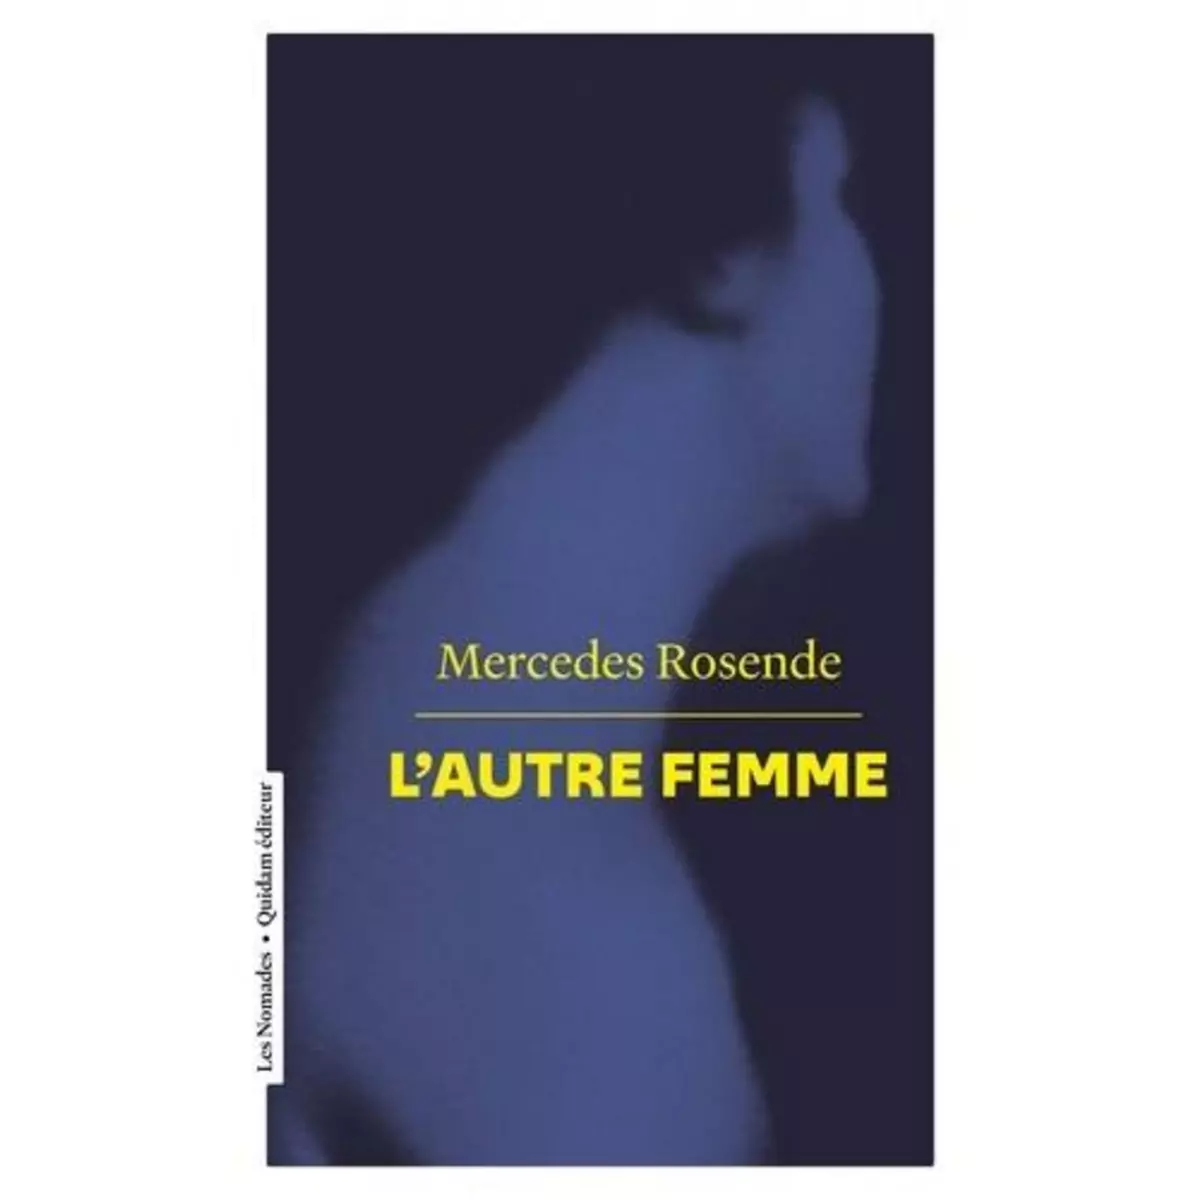  L'AUTRE FEMME, Rosende Mercedes